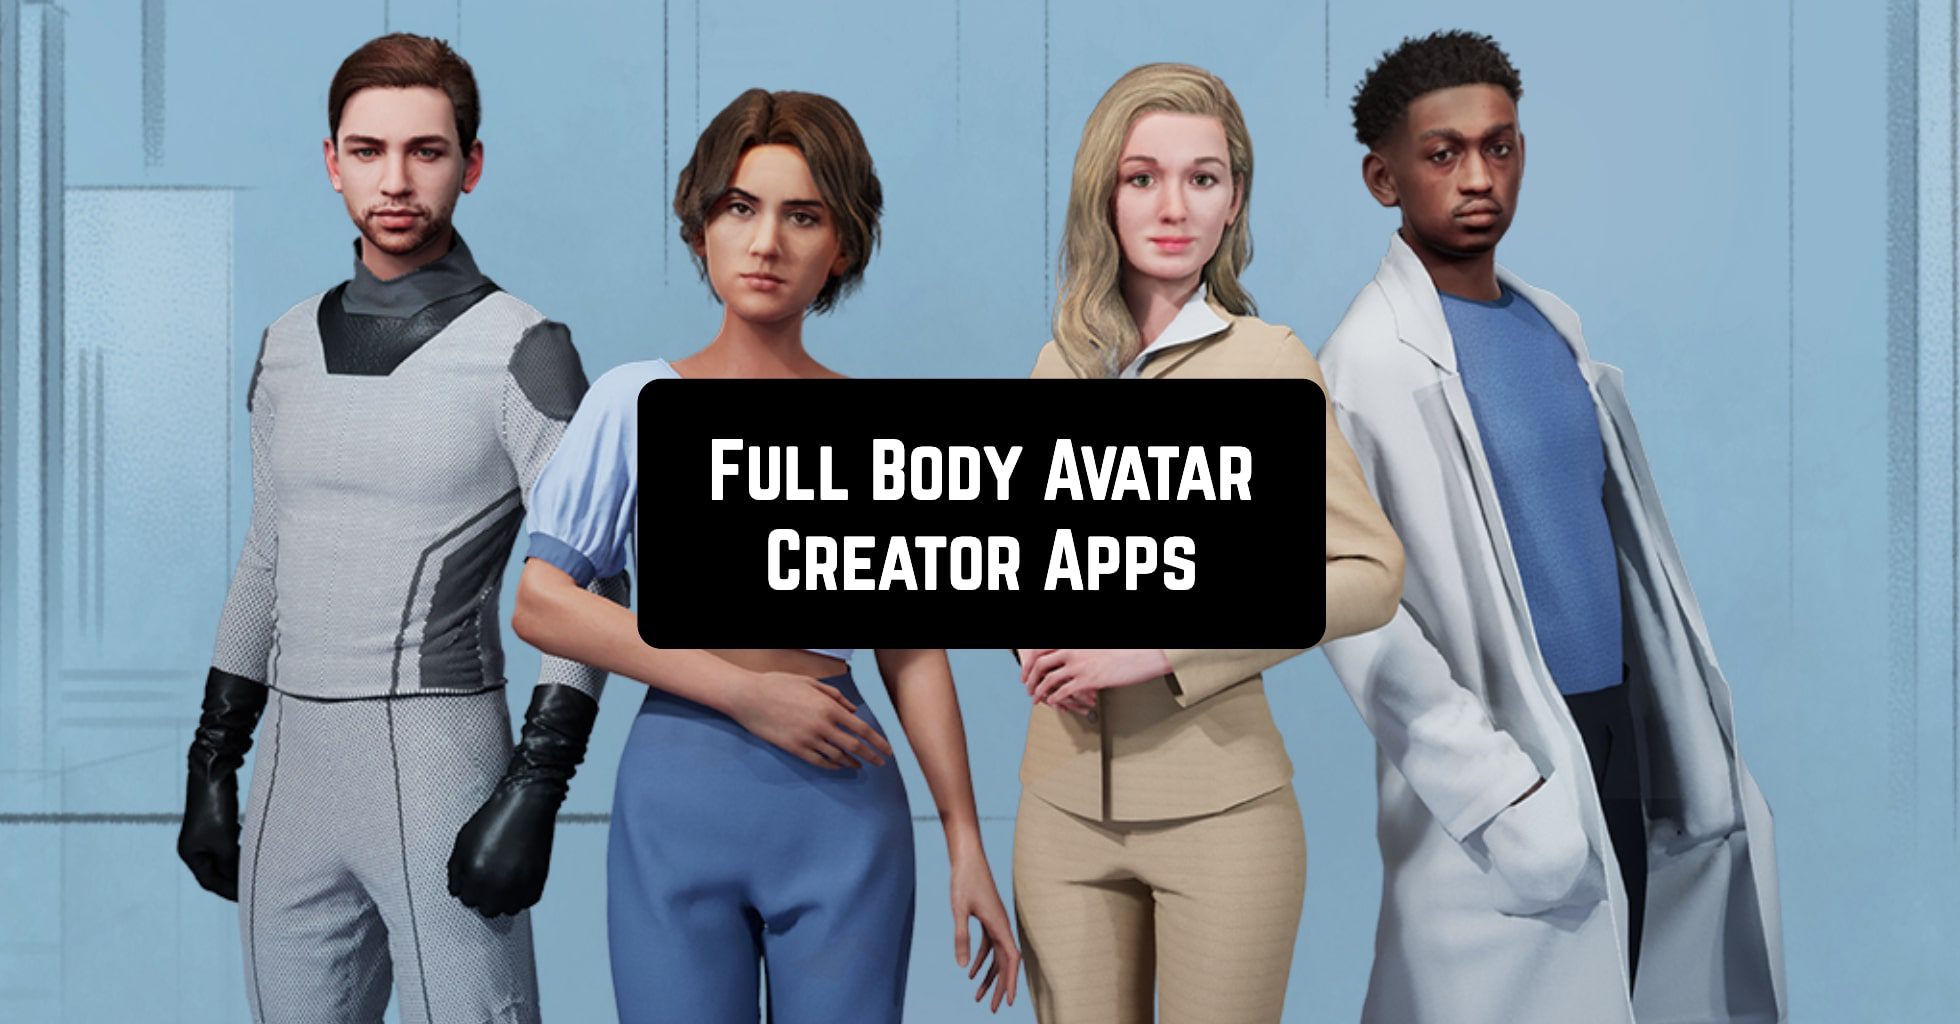 Full Body Avatar Creator Apps